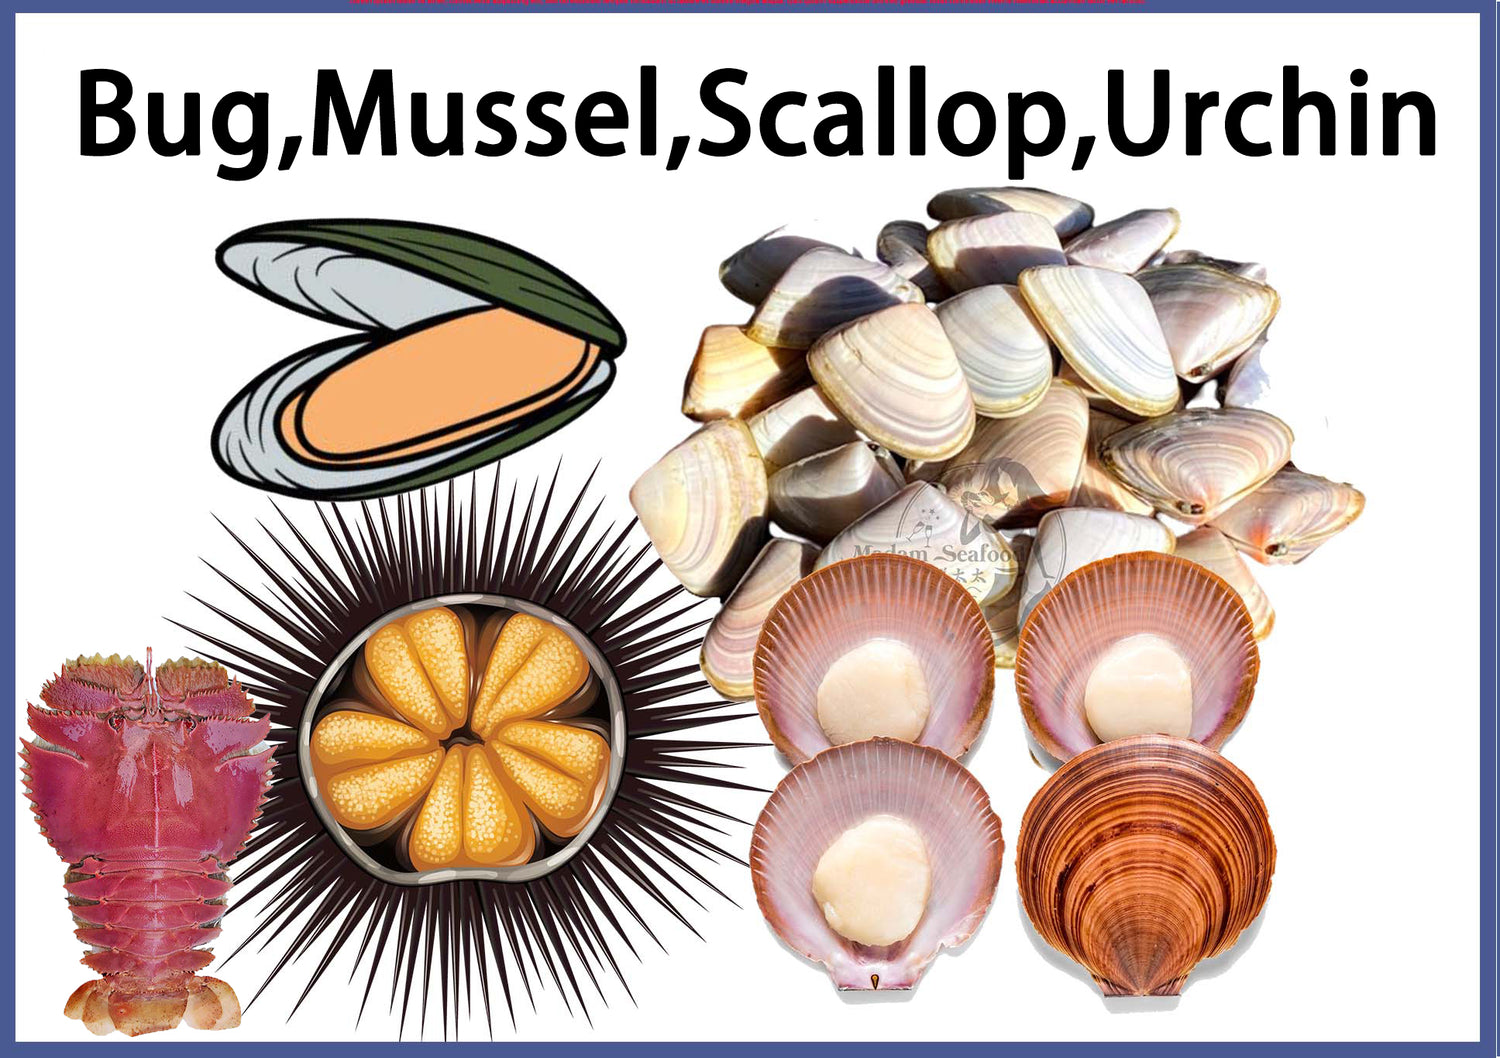 Bug, Mussel, Scallop, Urchin